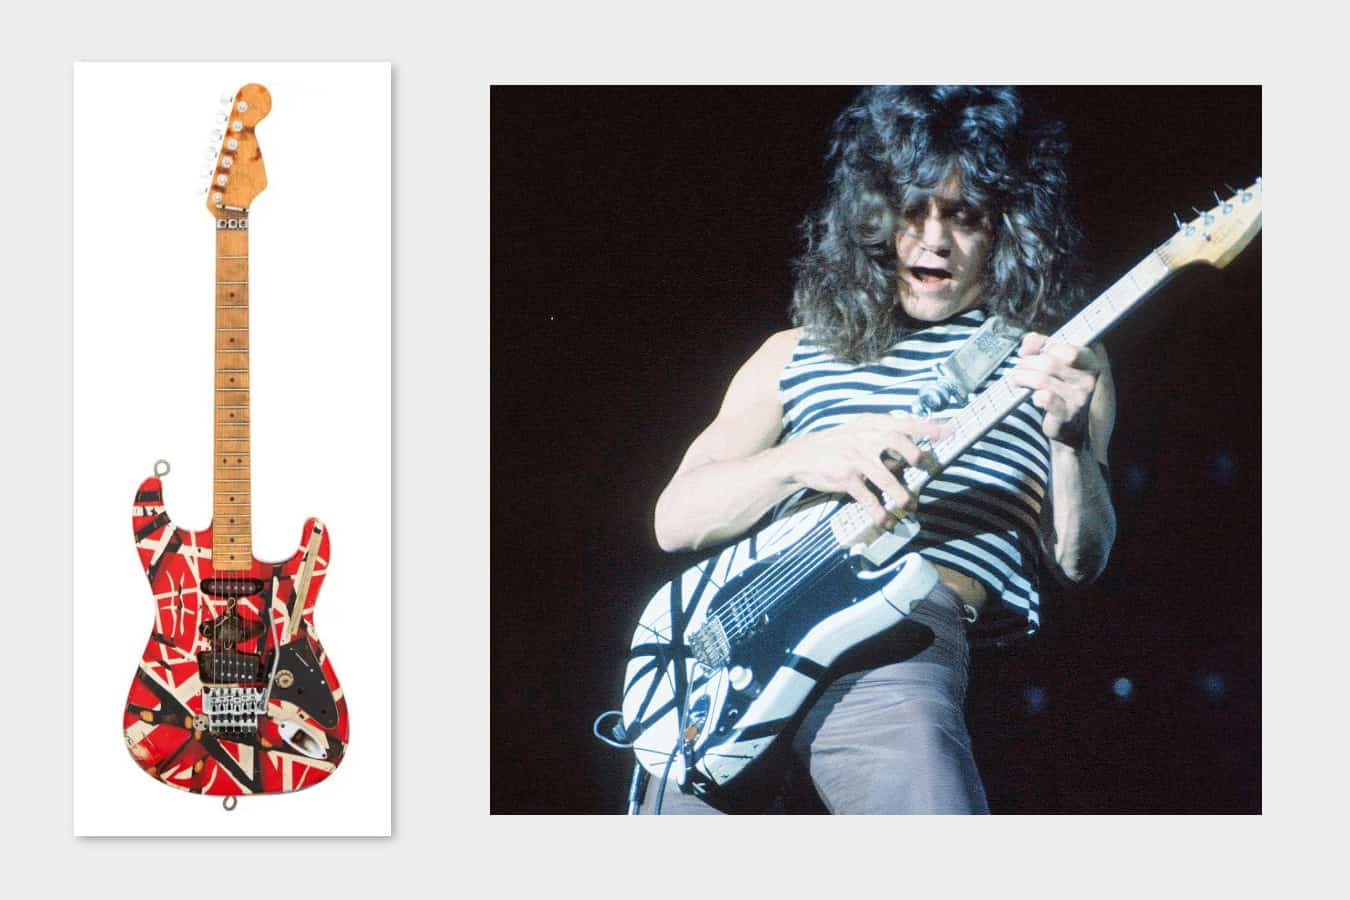 Eddie Van Halen's Guitar, Amps, Effects, Gear - Detailed History